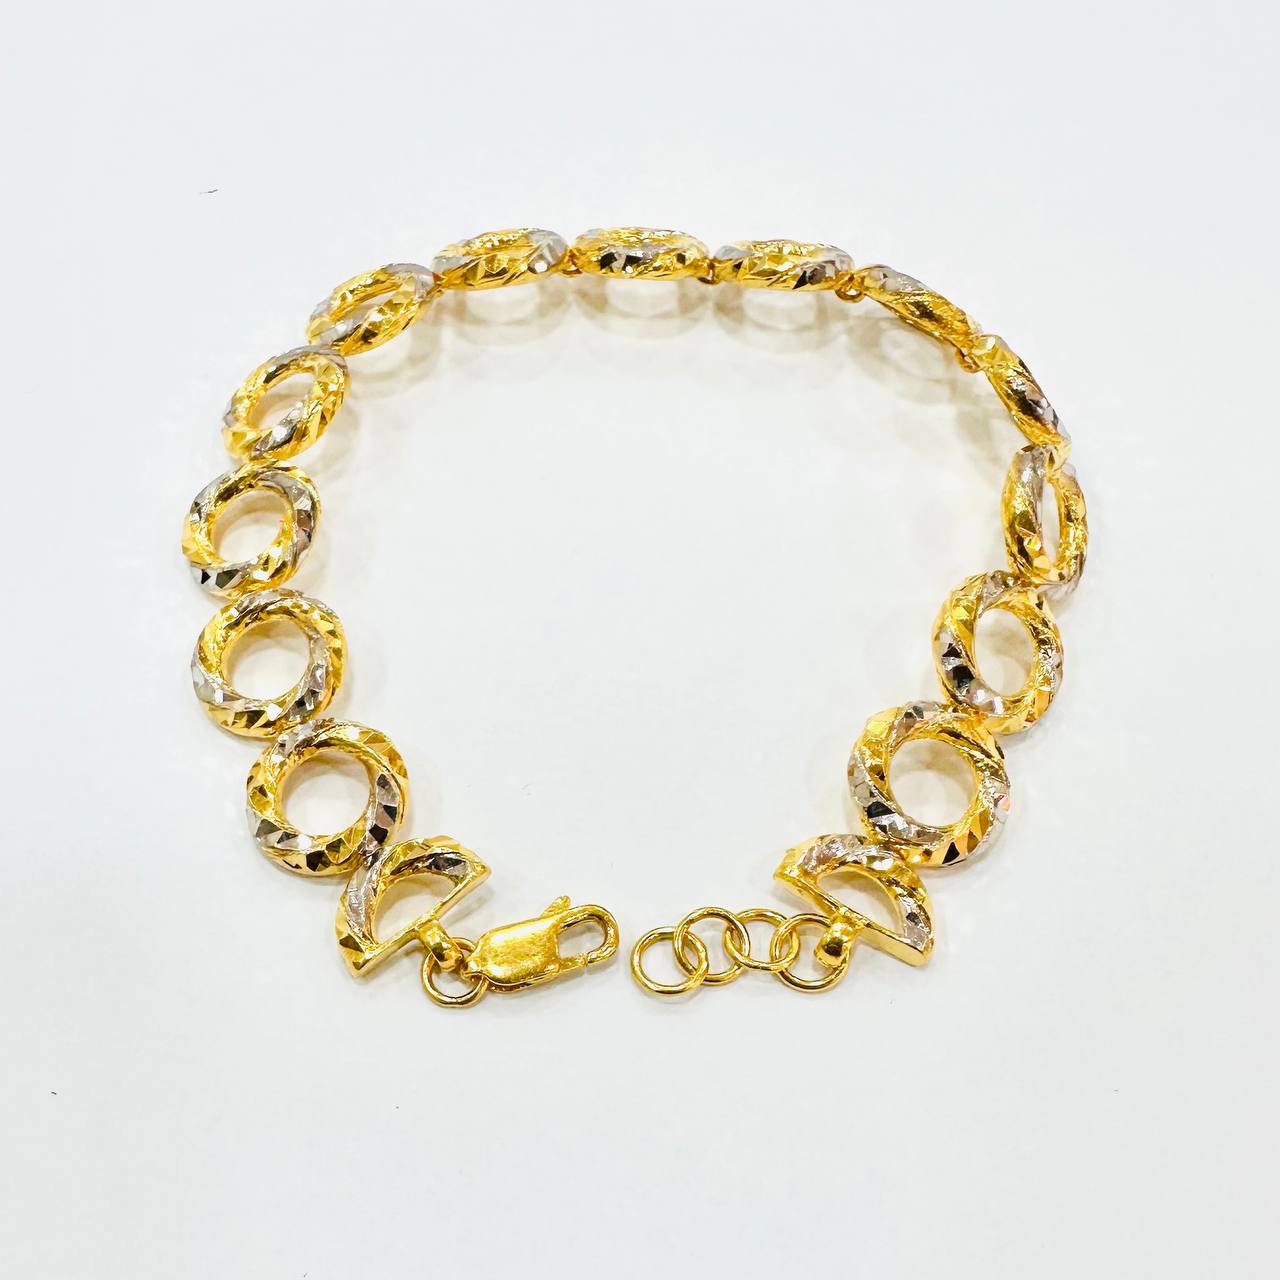 22k / 916 Gold Donut Ring Bracelet-Bracelets-Best Gold Shop